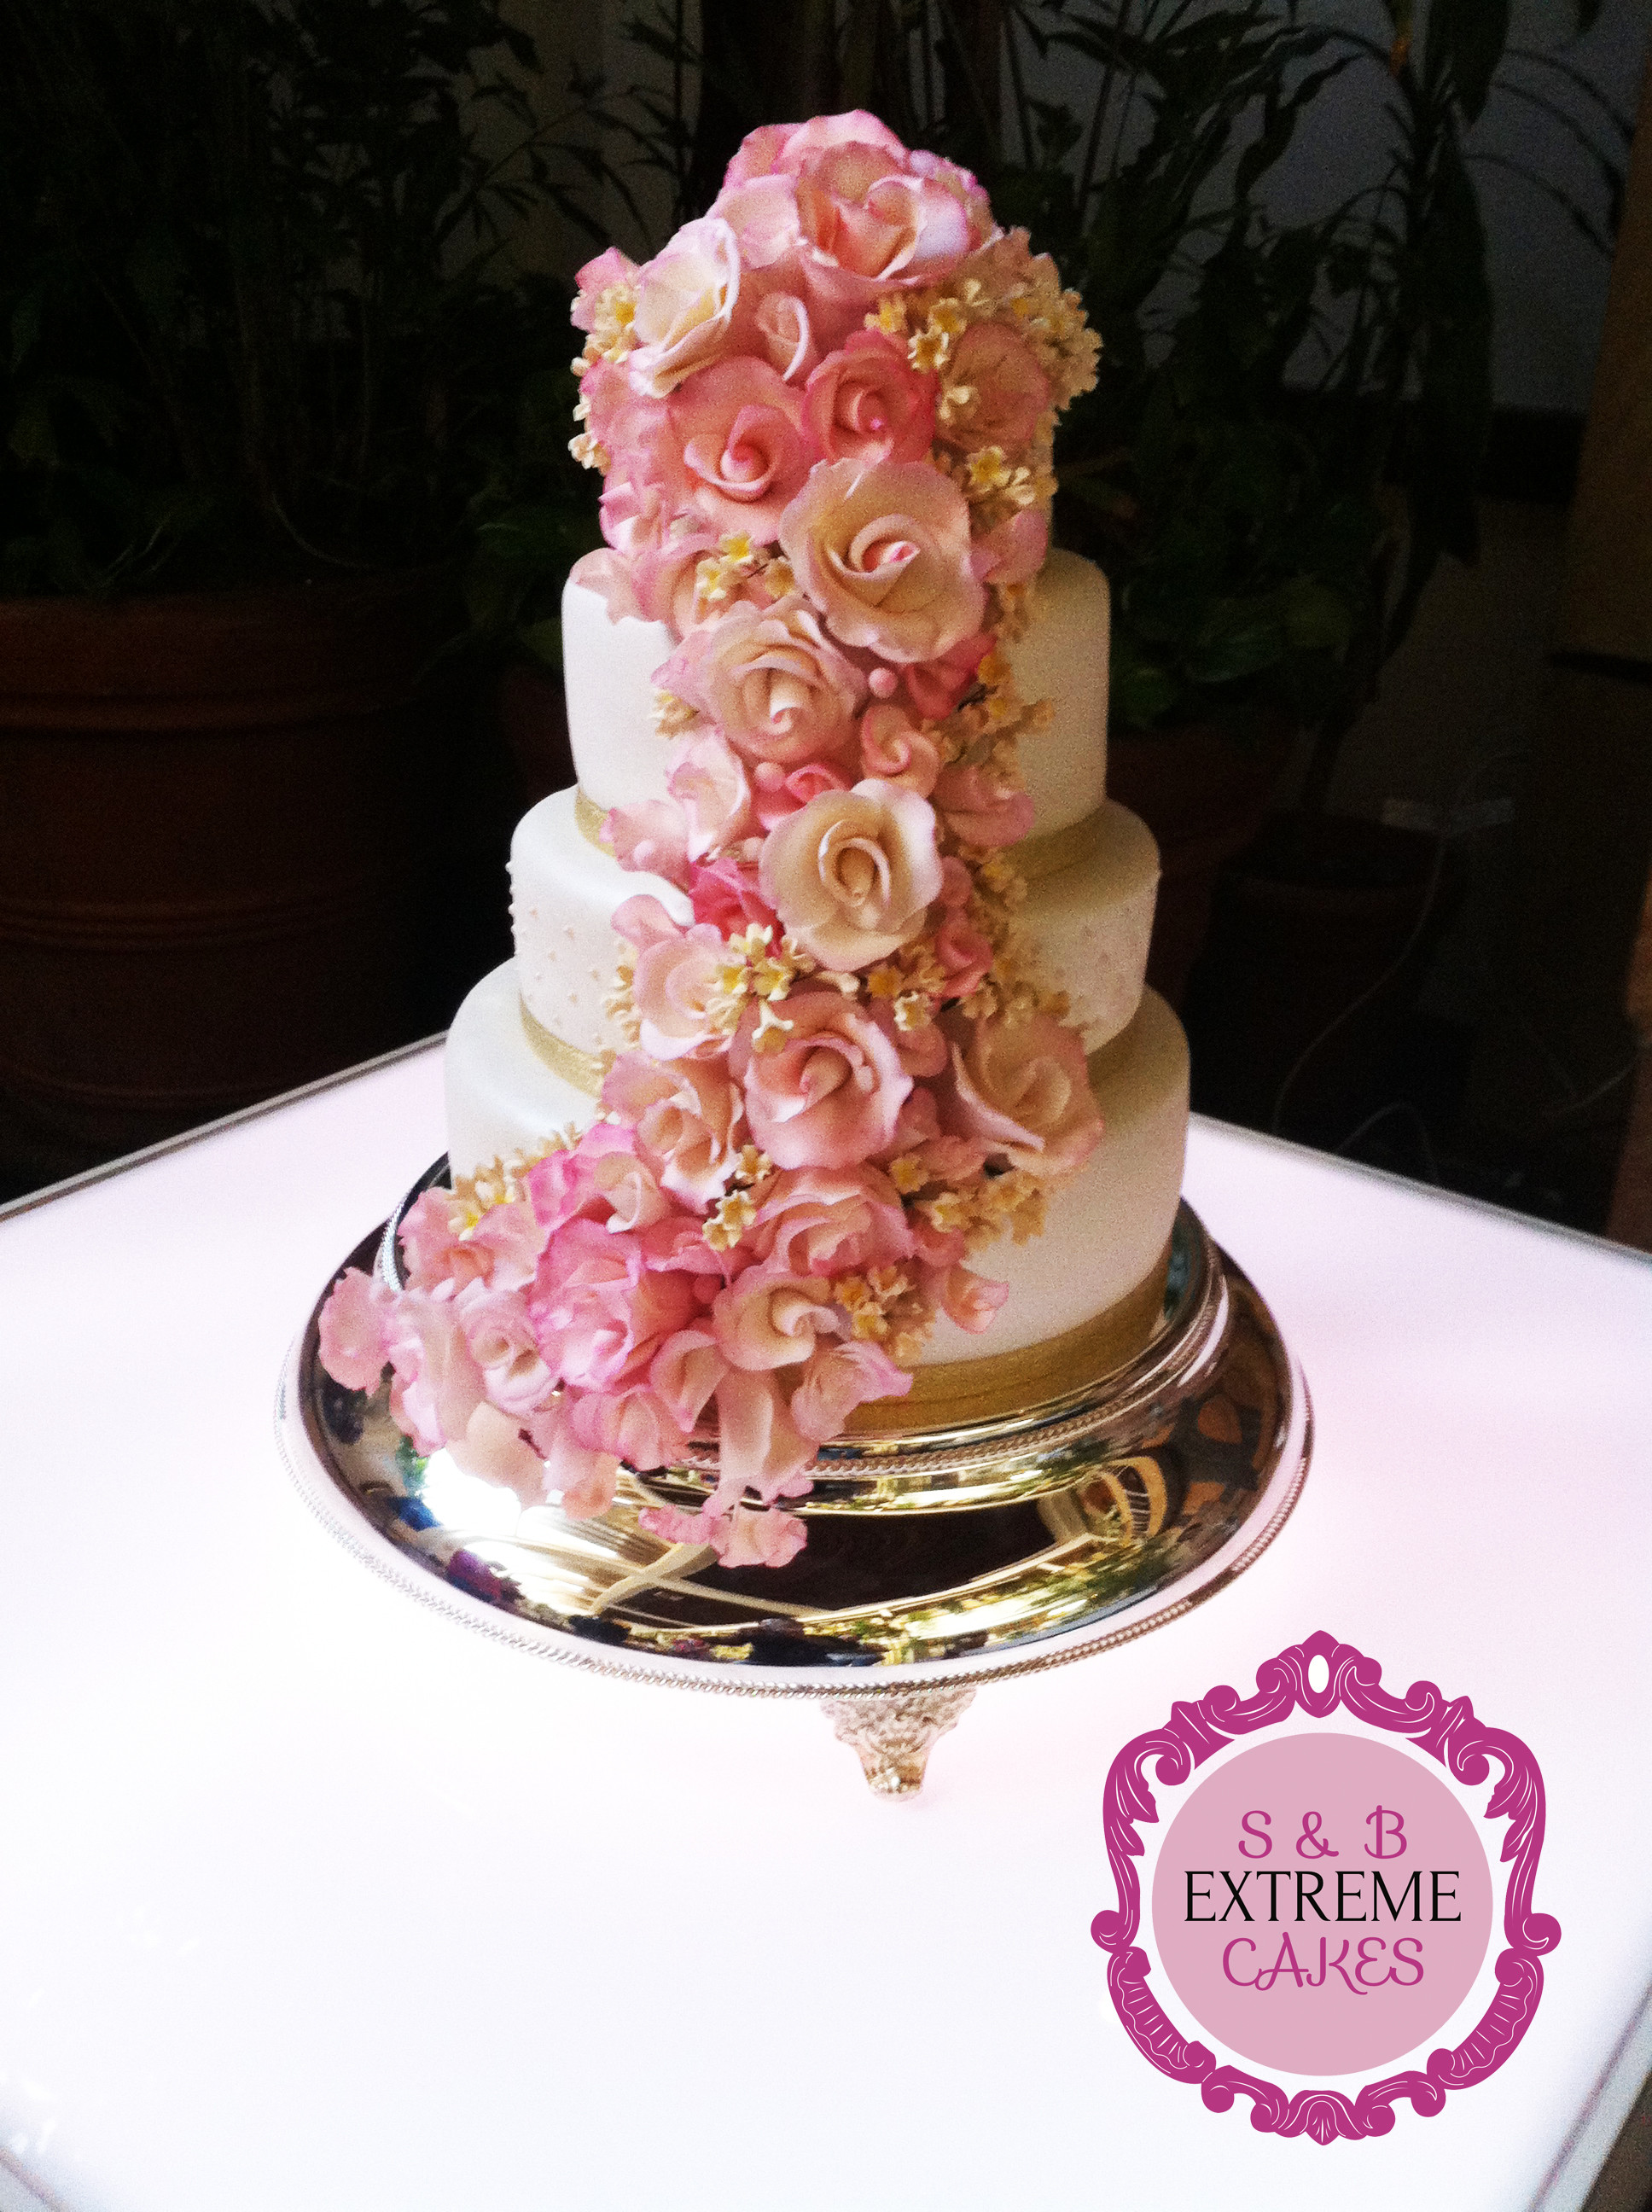 Extreme Wedding Cakes
 1000 images about S&B Extreme Cakes on Pinterest